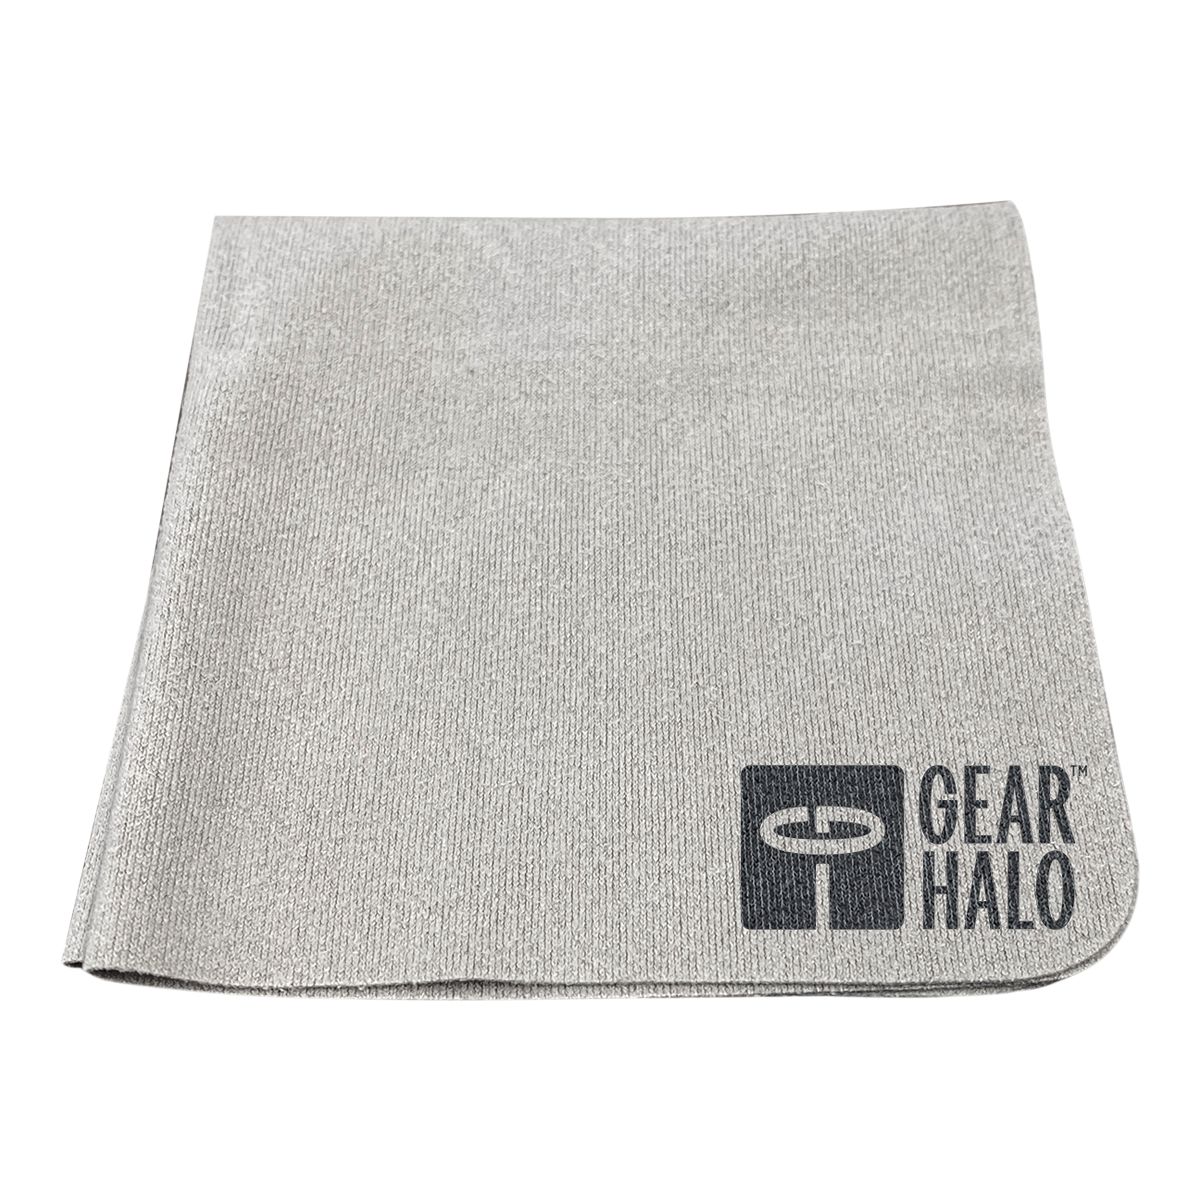 Image of Gearhalo Anti Fog Microfiber Cloth